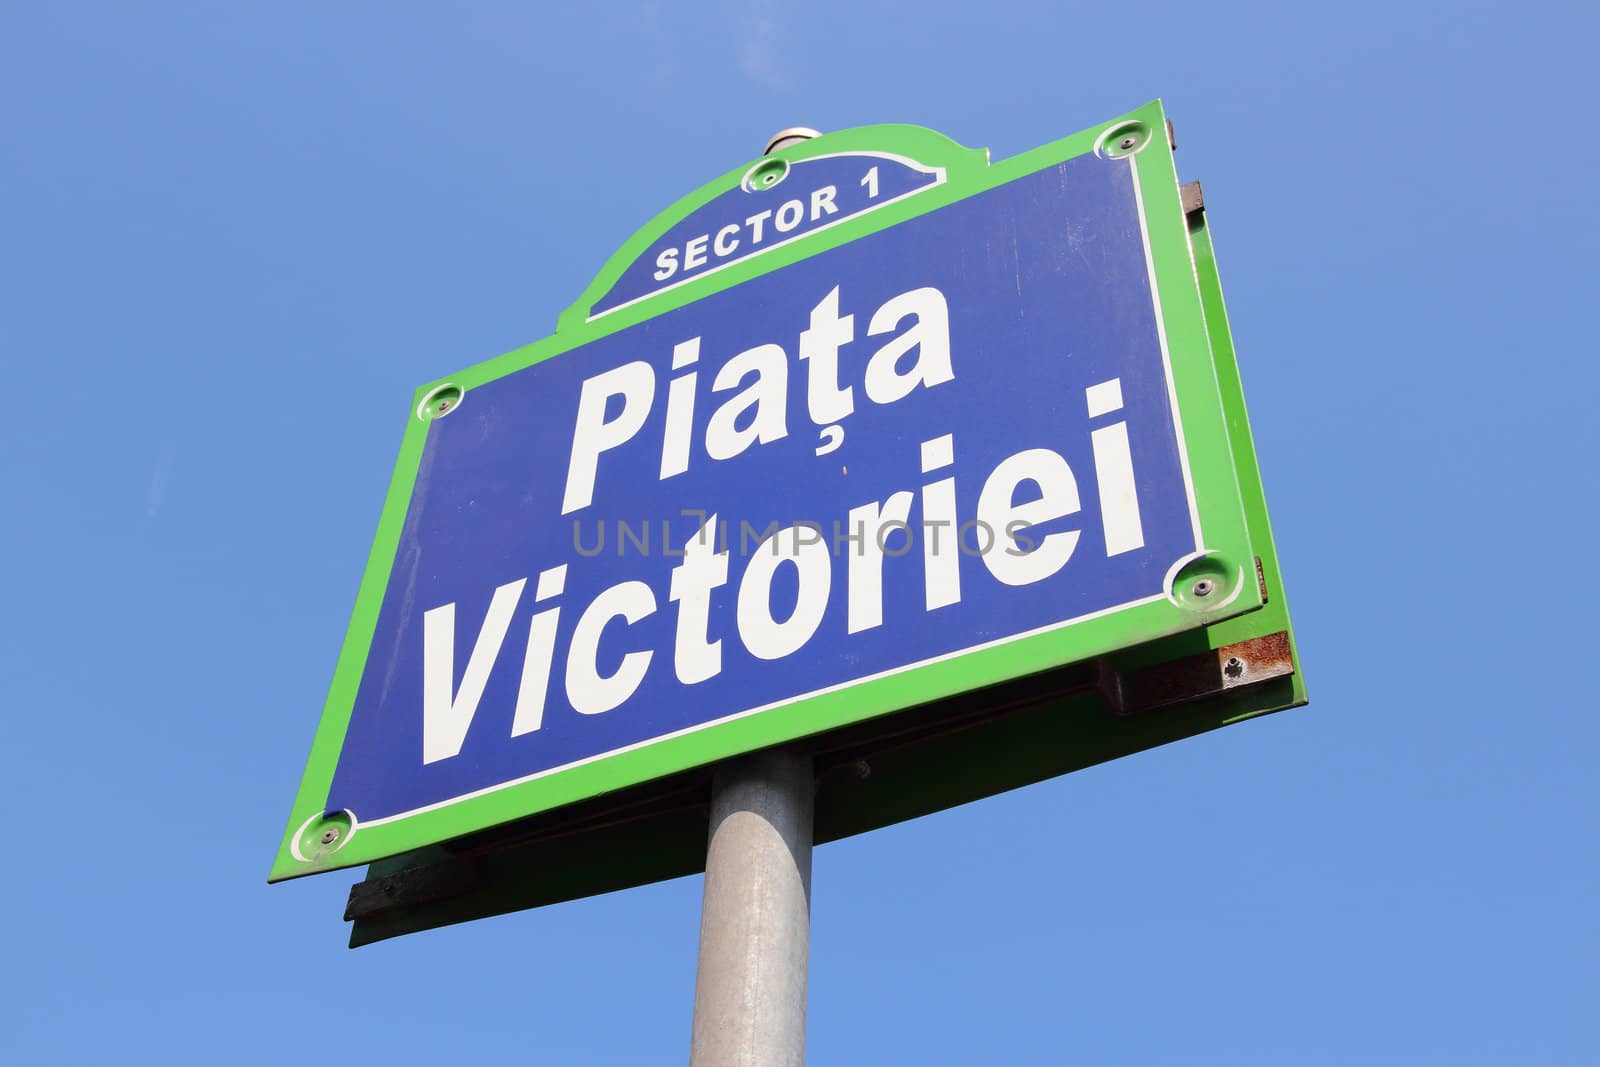 Bucharest - Victory Square by tupungato